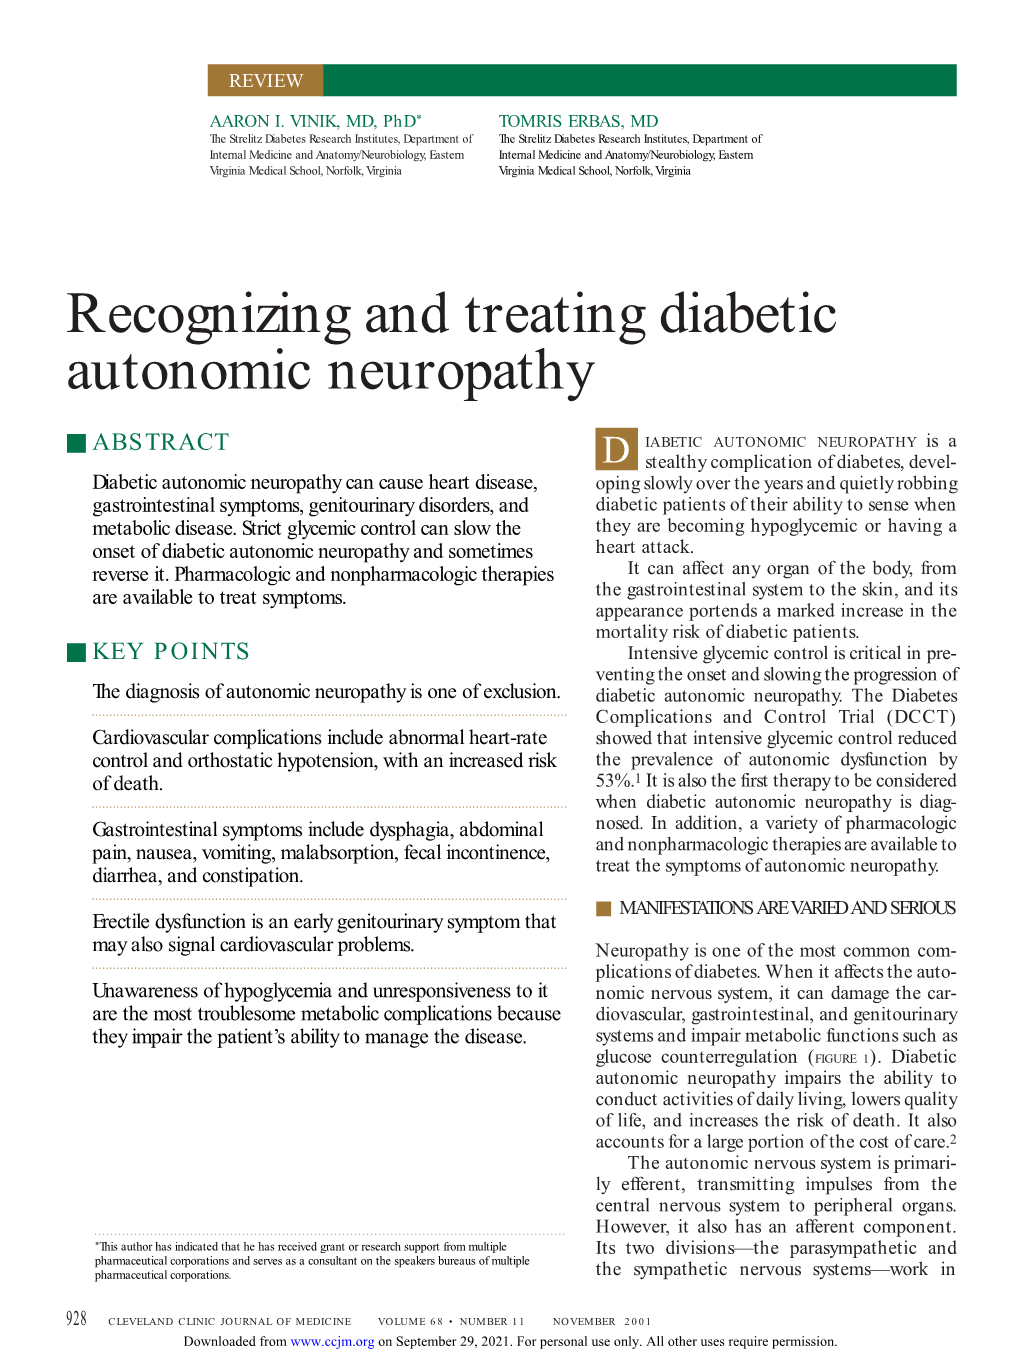 Recognizing and Treating Diabetic Autonomic Neuropathy